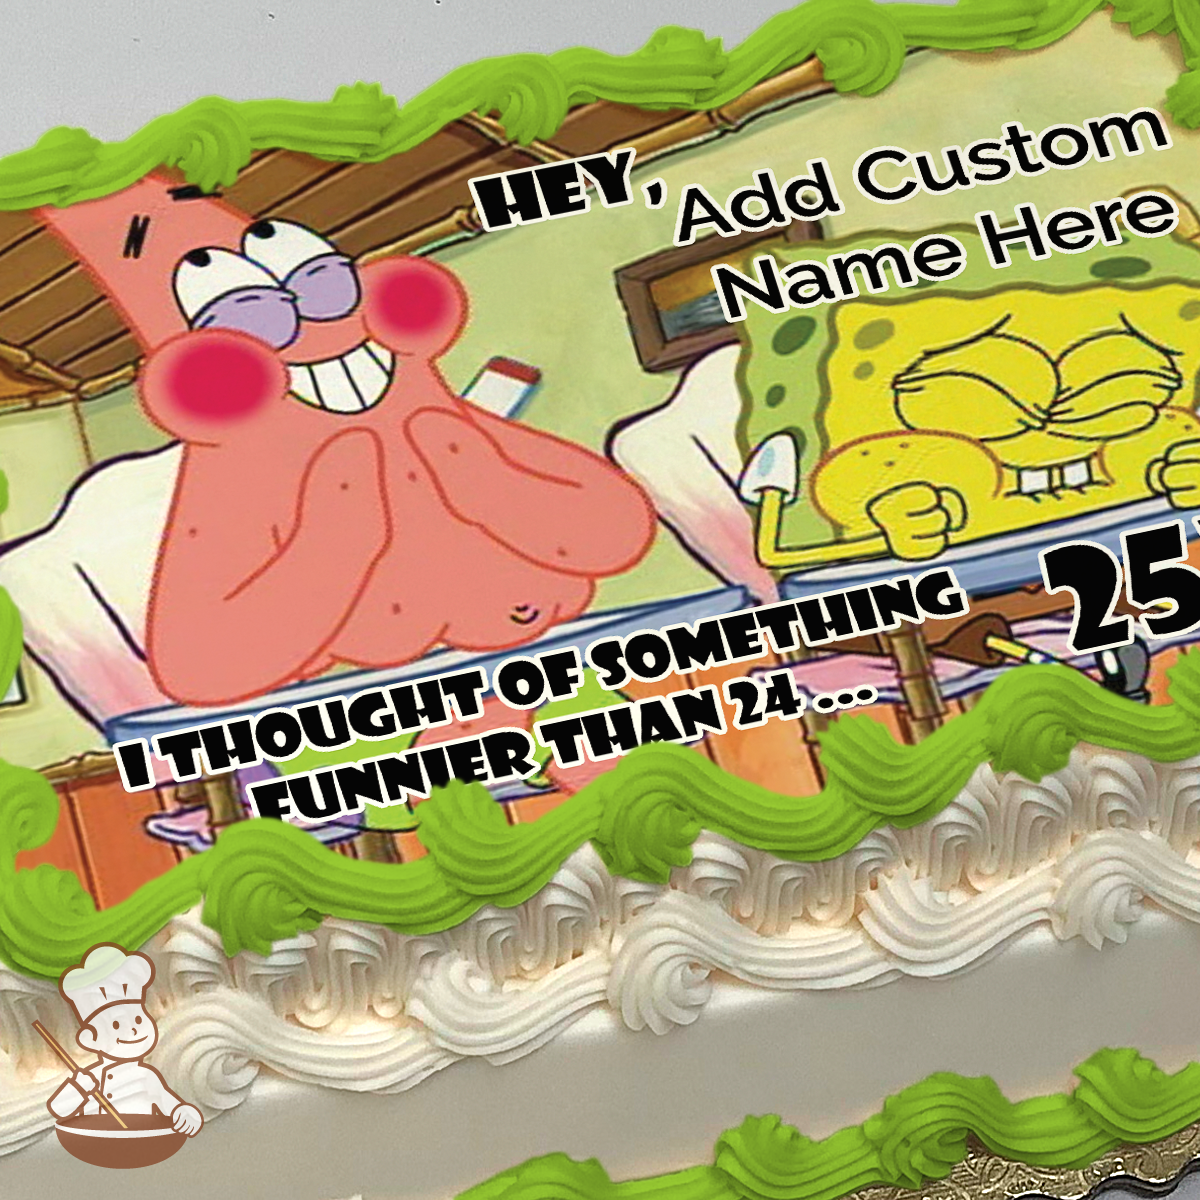 What's funnier than 24….? 25! • • • #spongebob #spongebobcake #memes  #whatsfunnierthan24 #cake #birthday #bday | Instagram